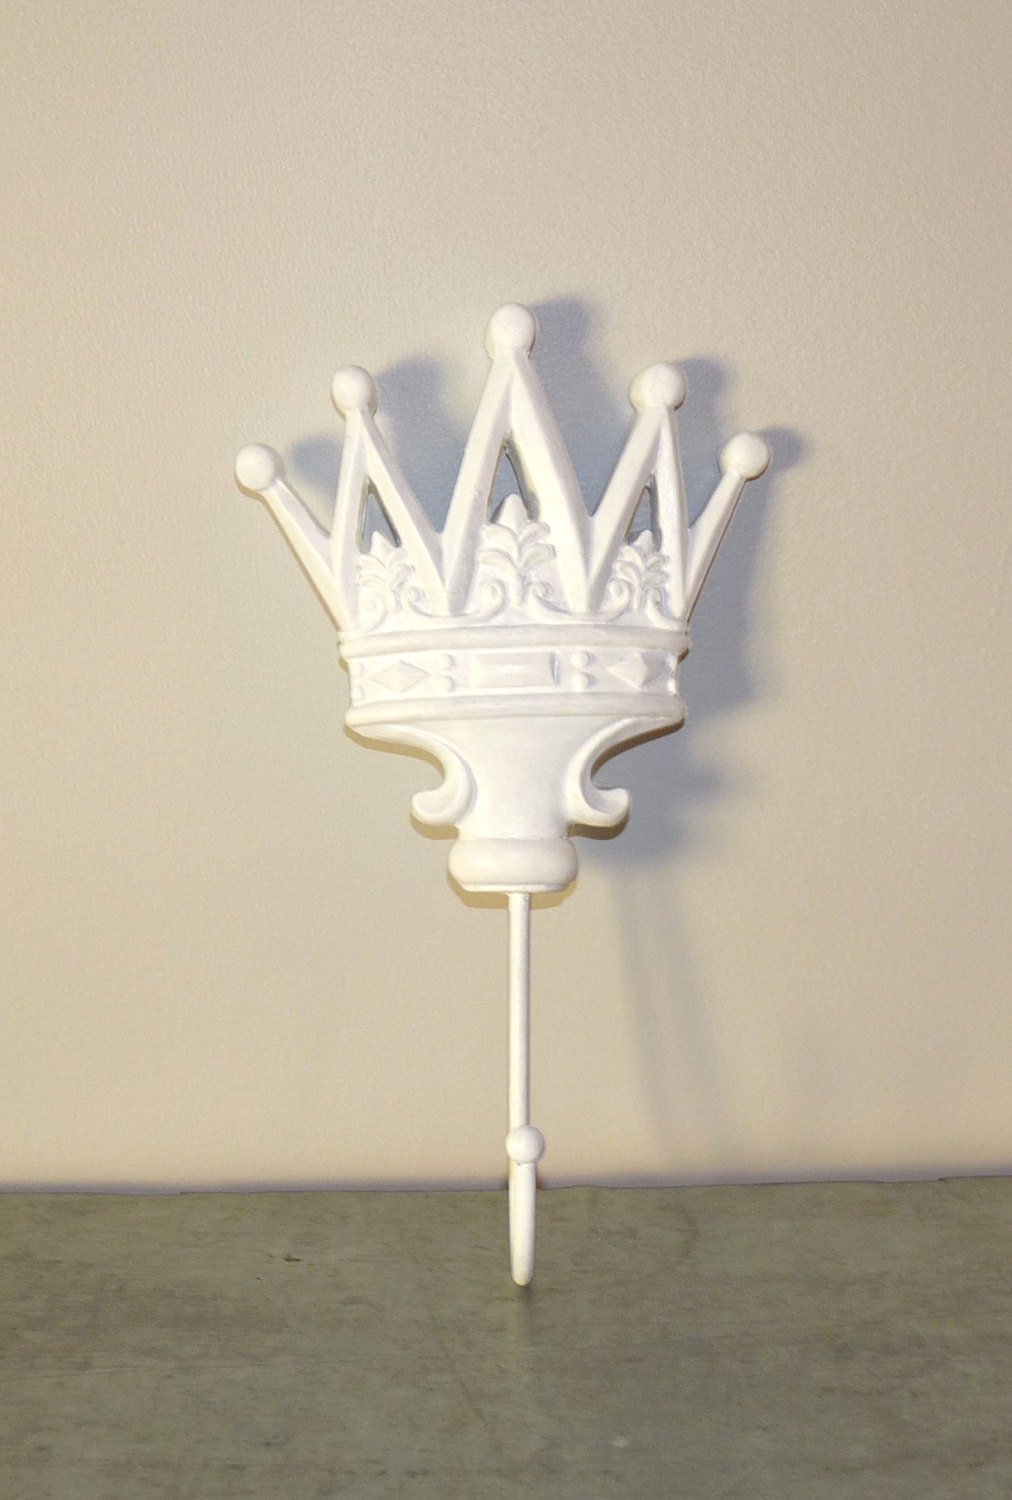 Princess Decor Wall Hooks Clothing Hooks Crown by LittleShopofPop